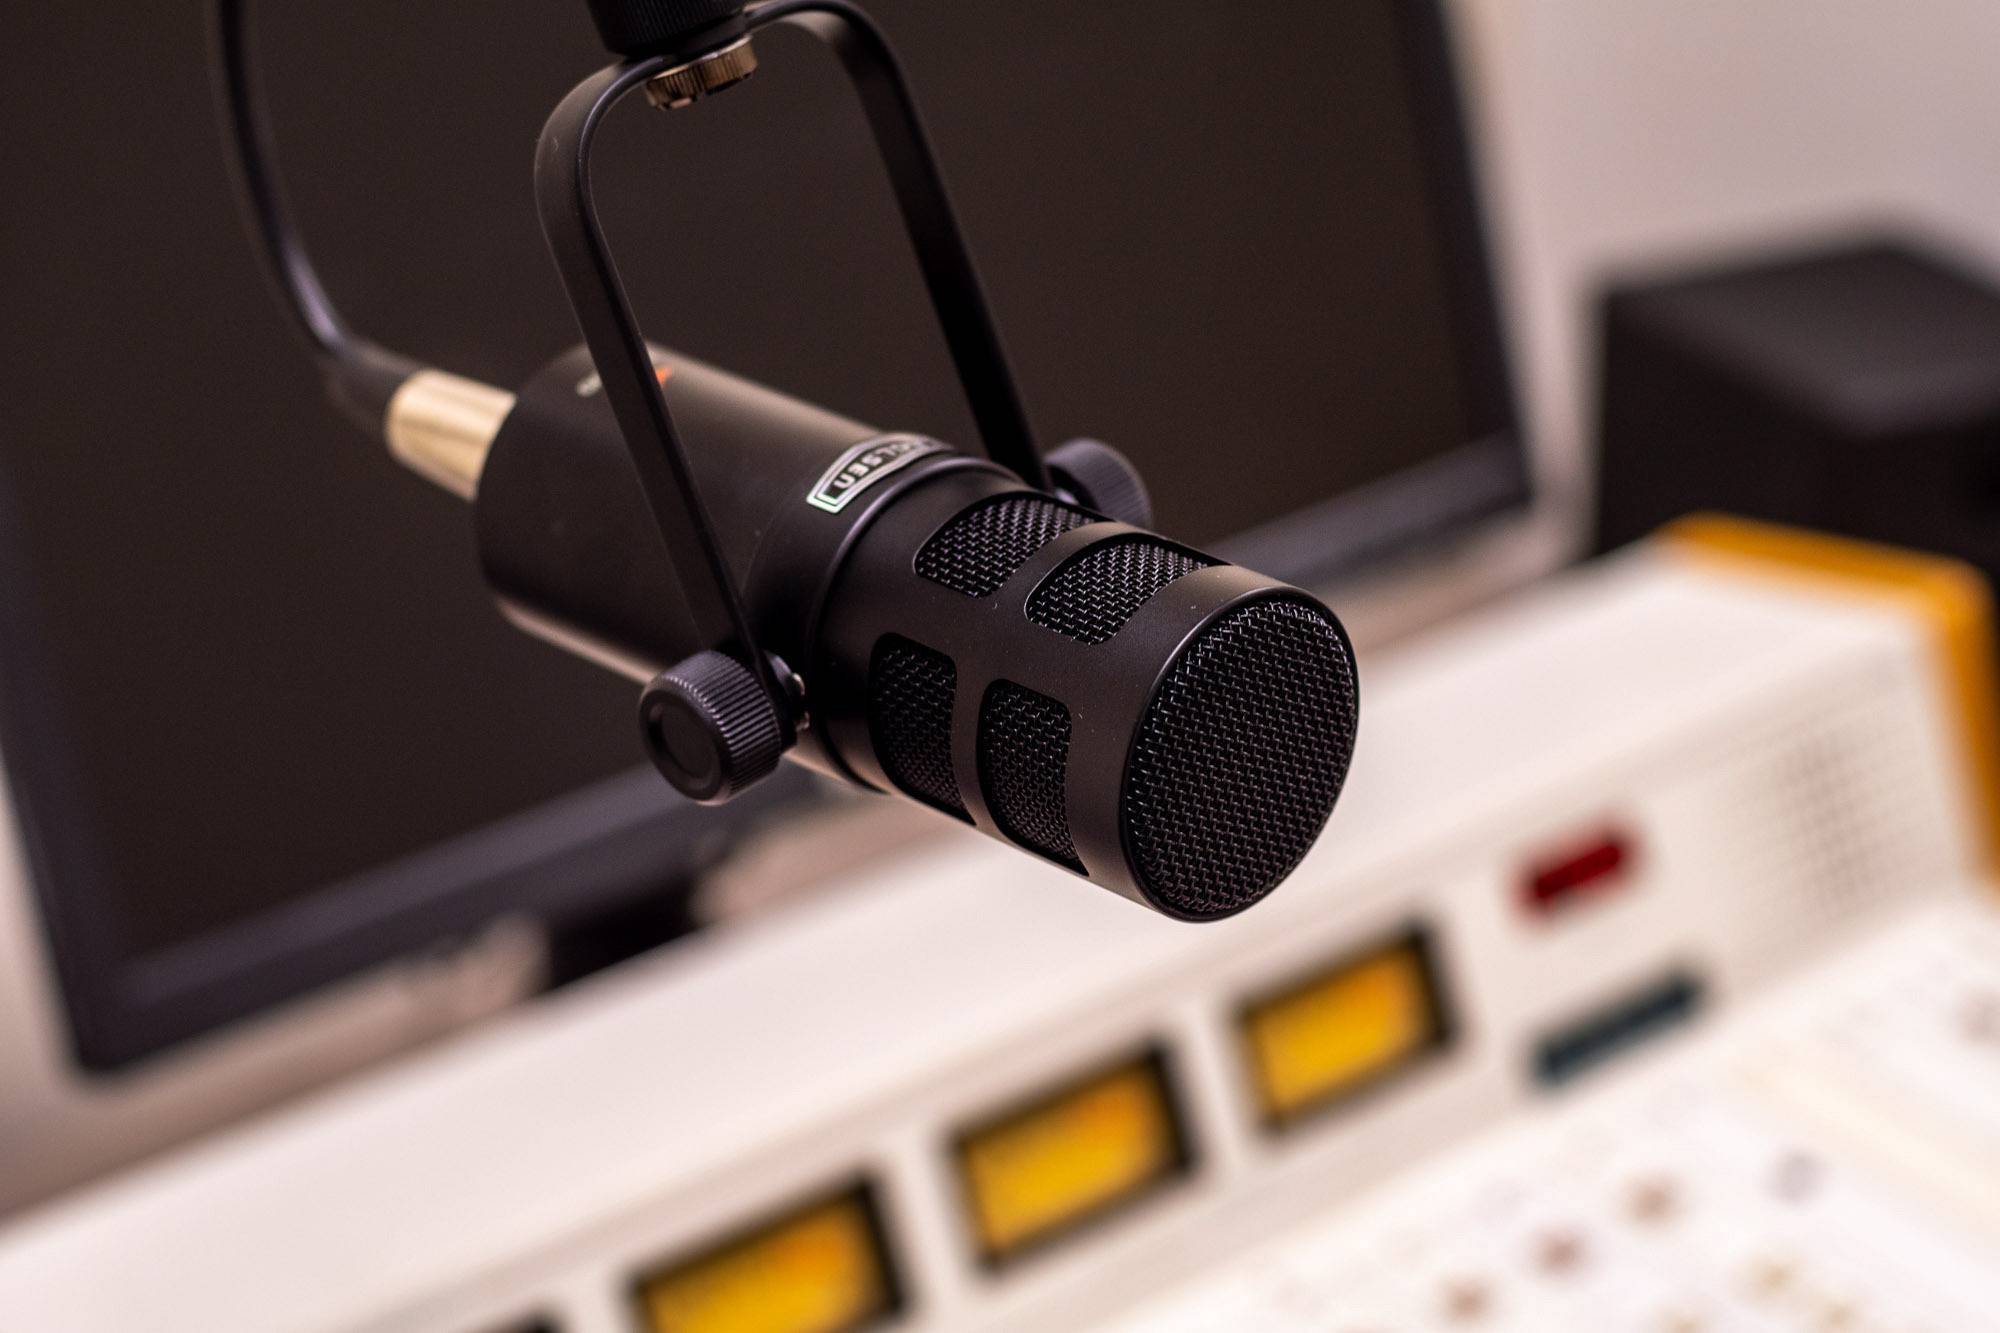 Microphone in studio